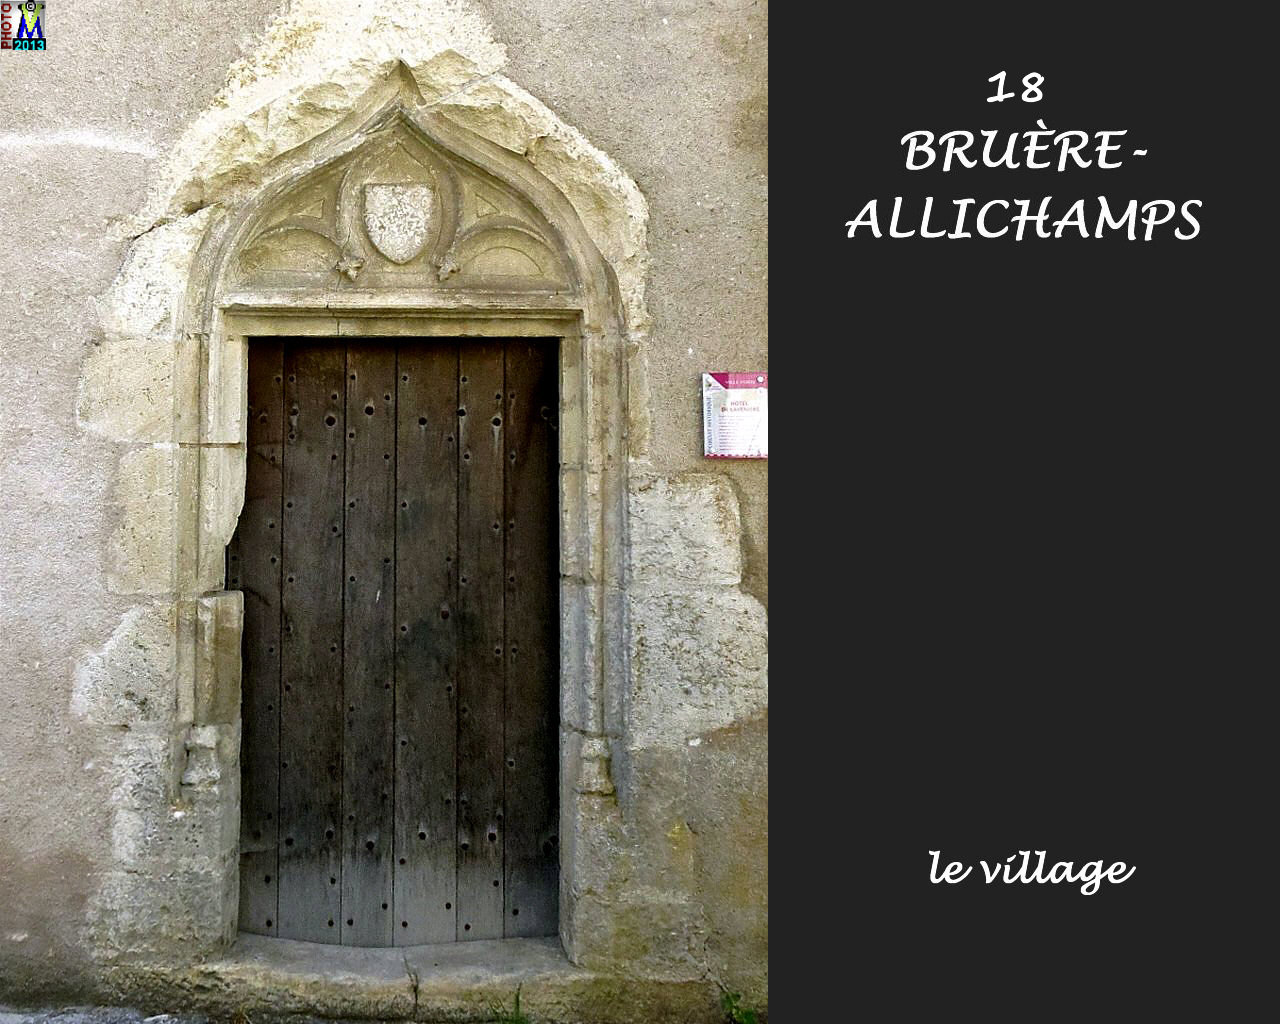 18BRUERE-ALLICHAMPS_village_122.jpg